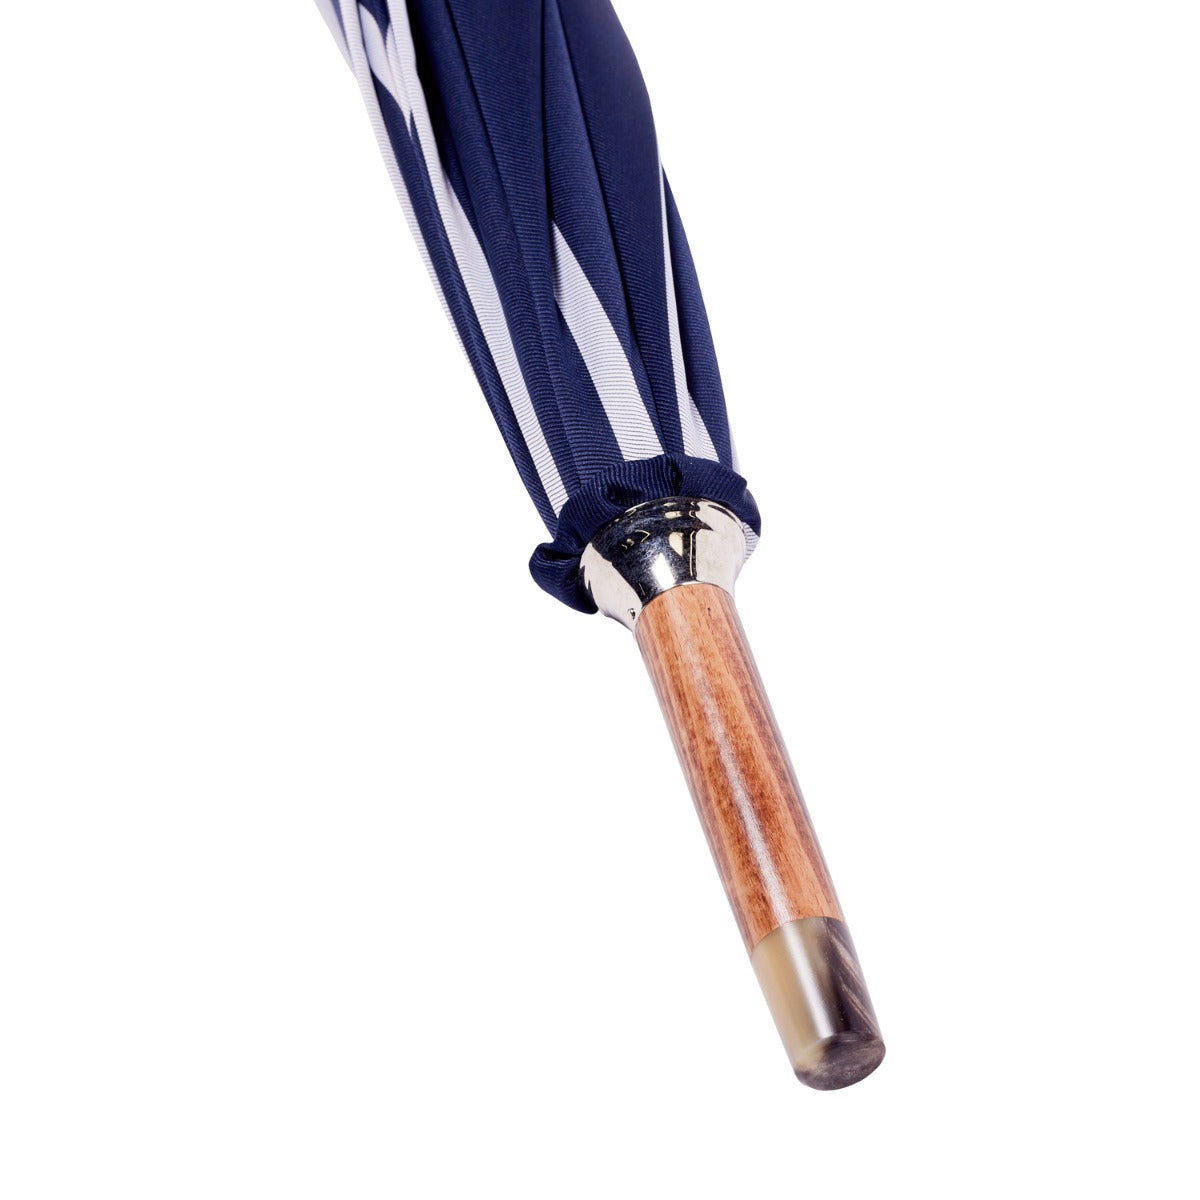 Navy Pin Stripe Umbrella with Bamboo Handle